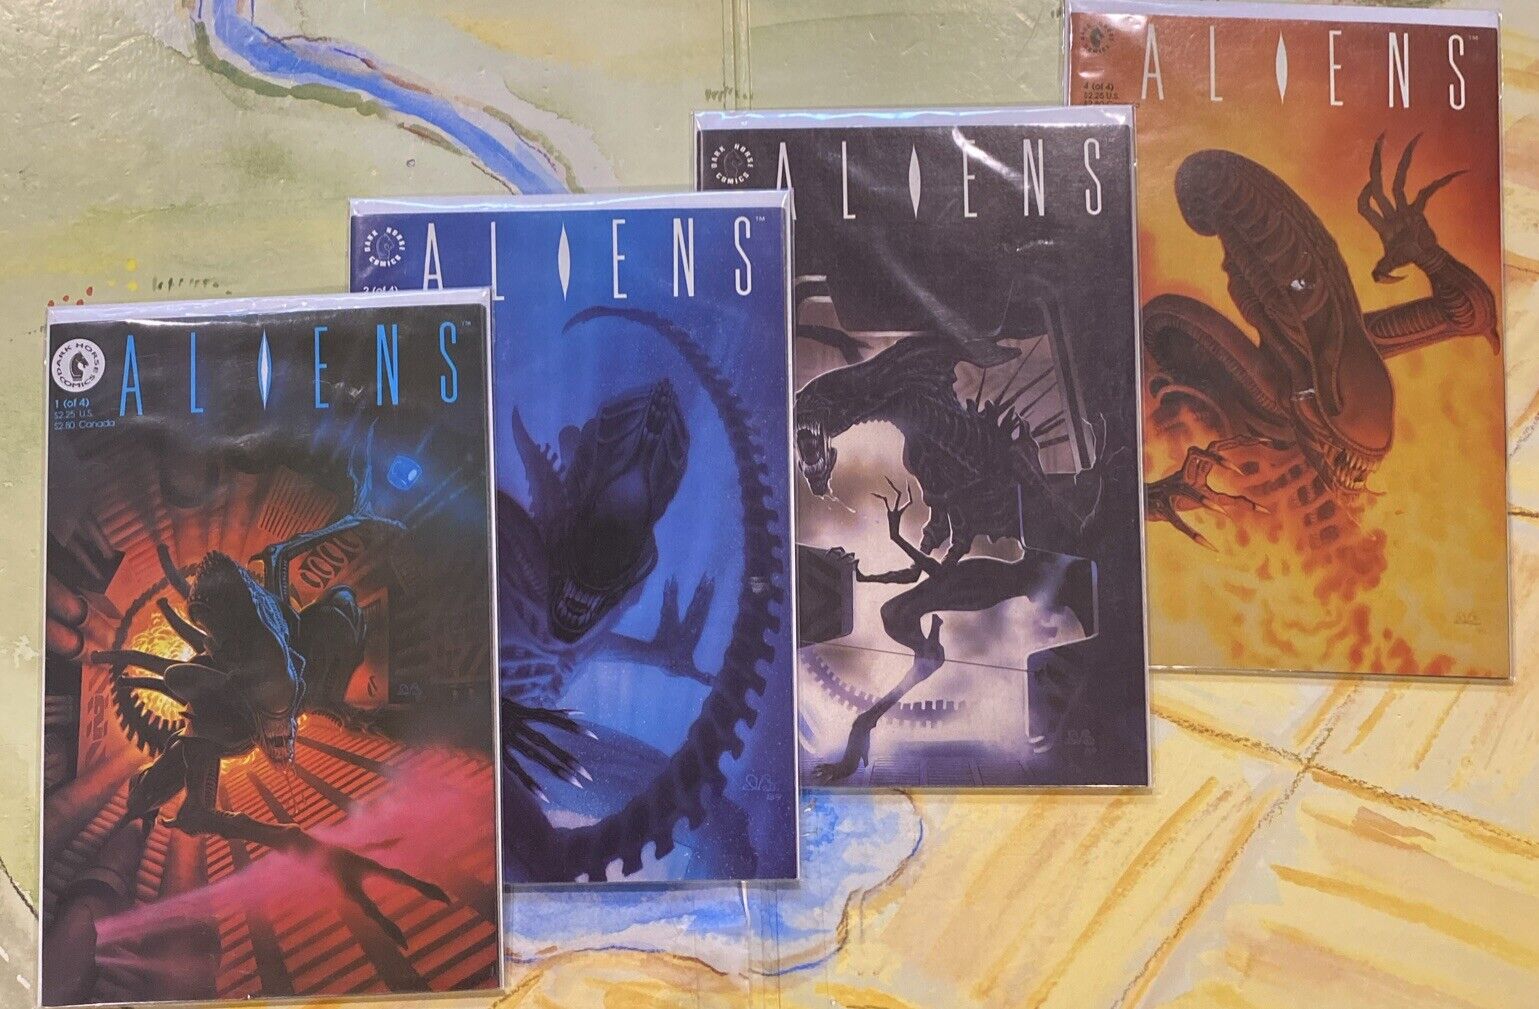 Aliens, Vol. 2 - Complete series 1-4 Dark Horse, 1989 Mark Verheiden